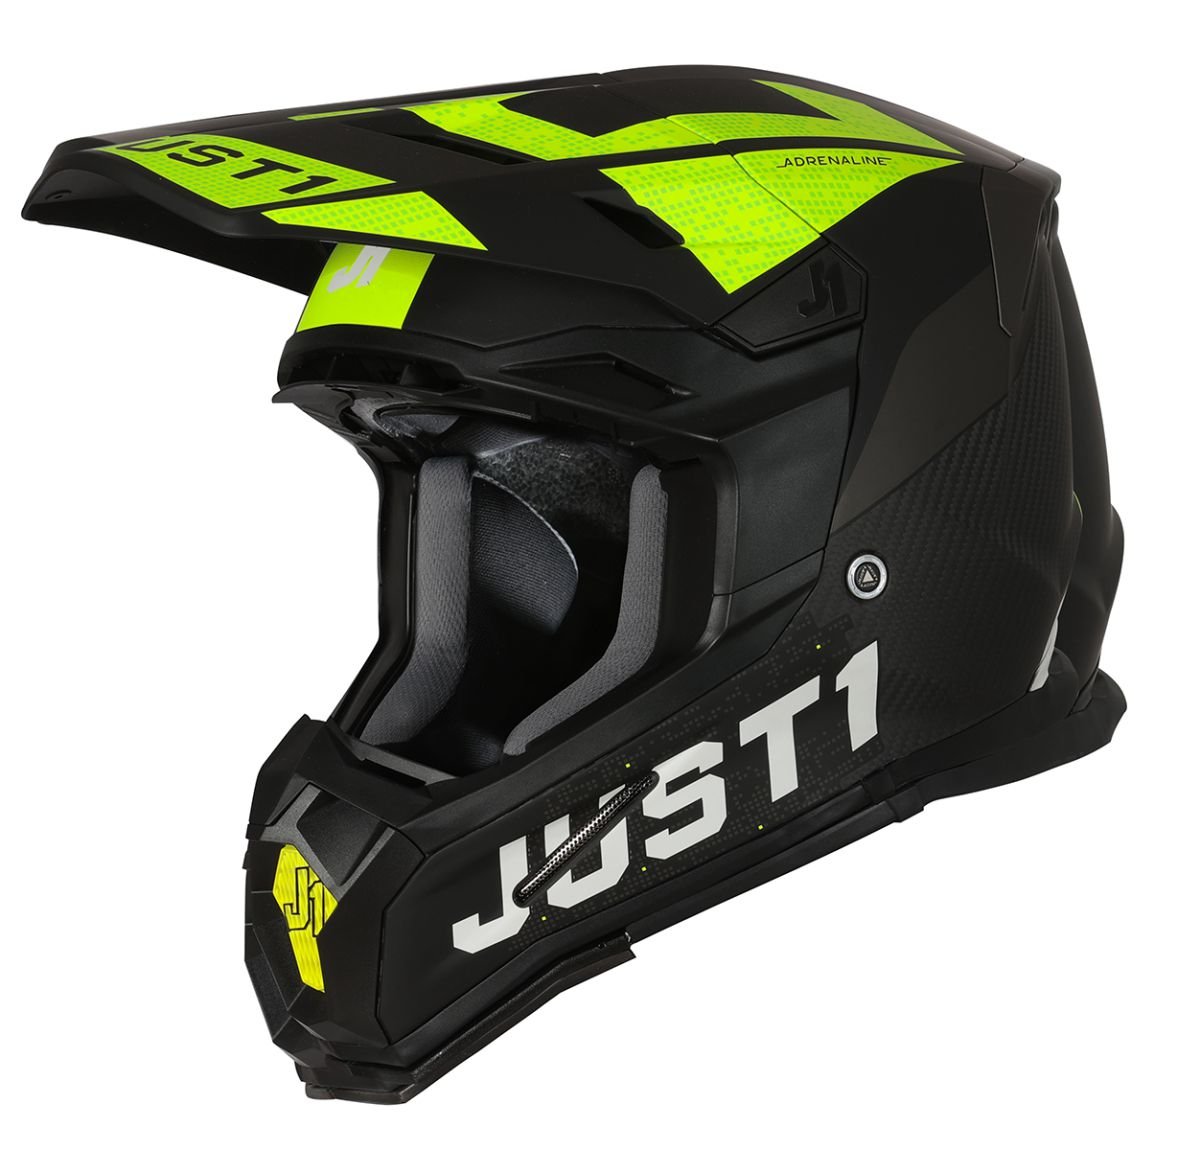 Image of EU Just1 Helmet J-22 Adrenaline Noir Jaune Fluo Carbon Mat Casque Cross Taille S